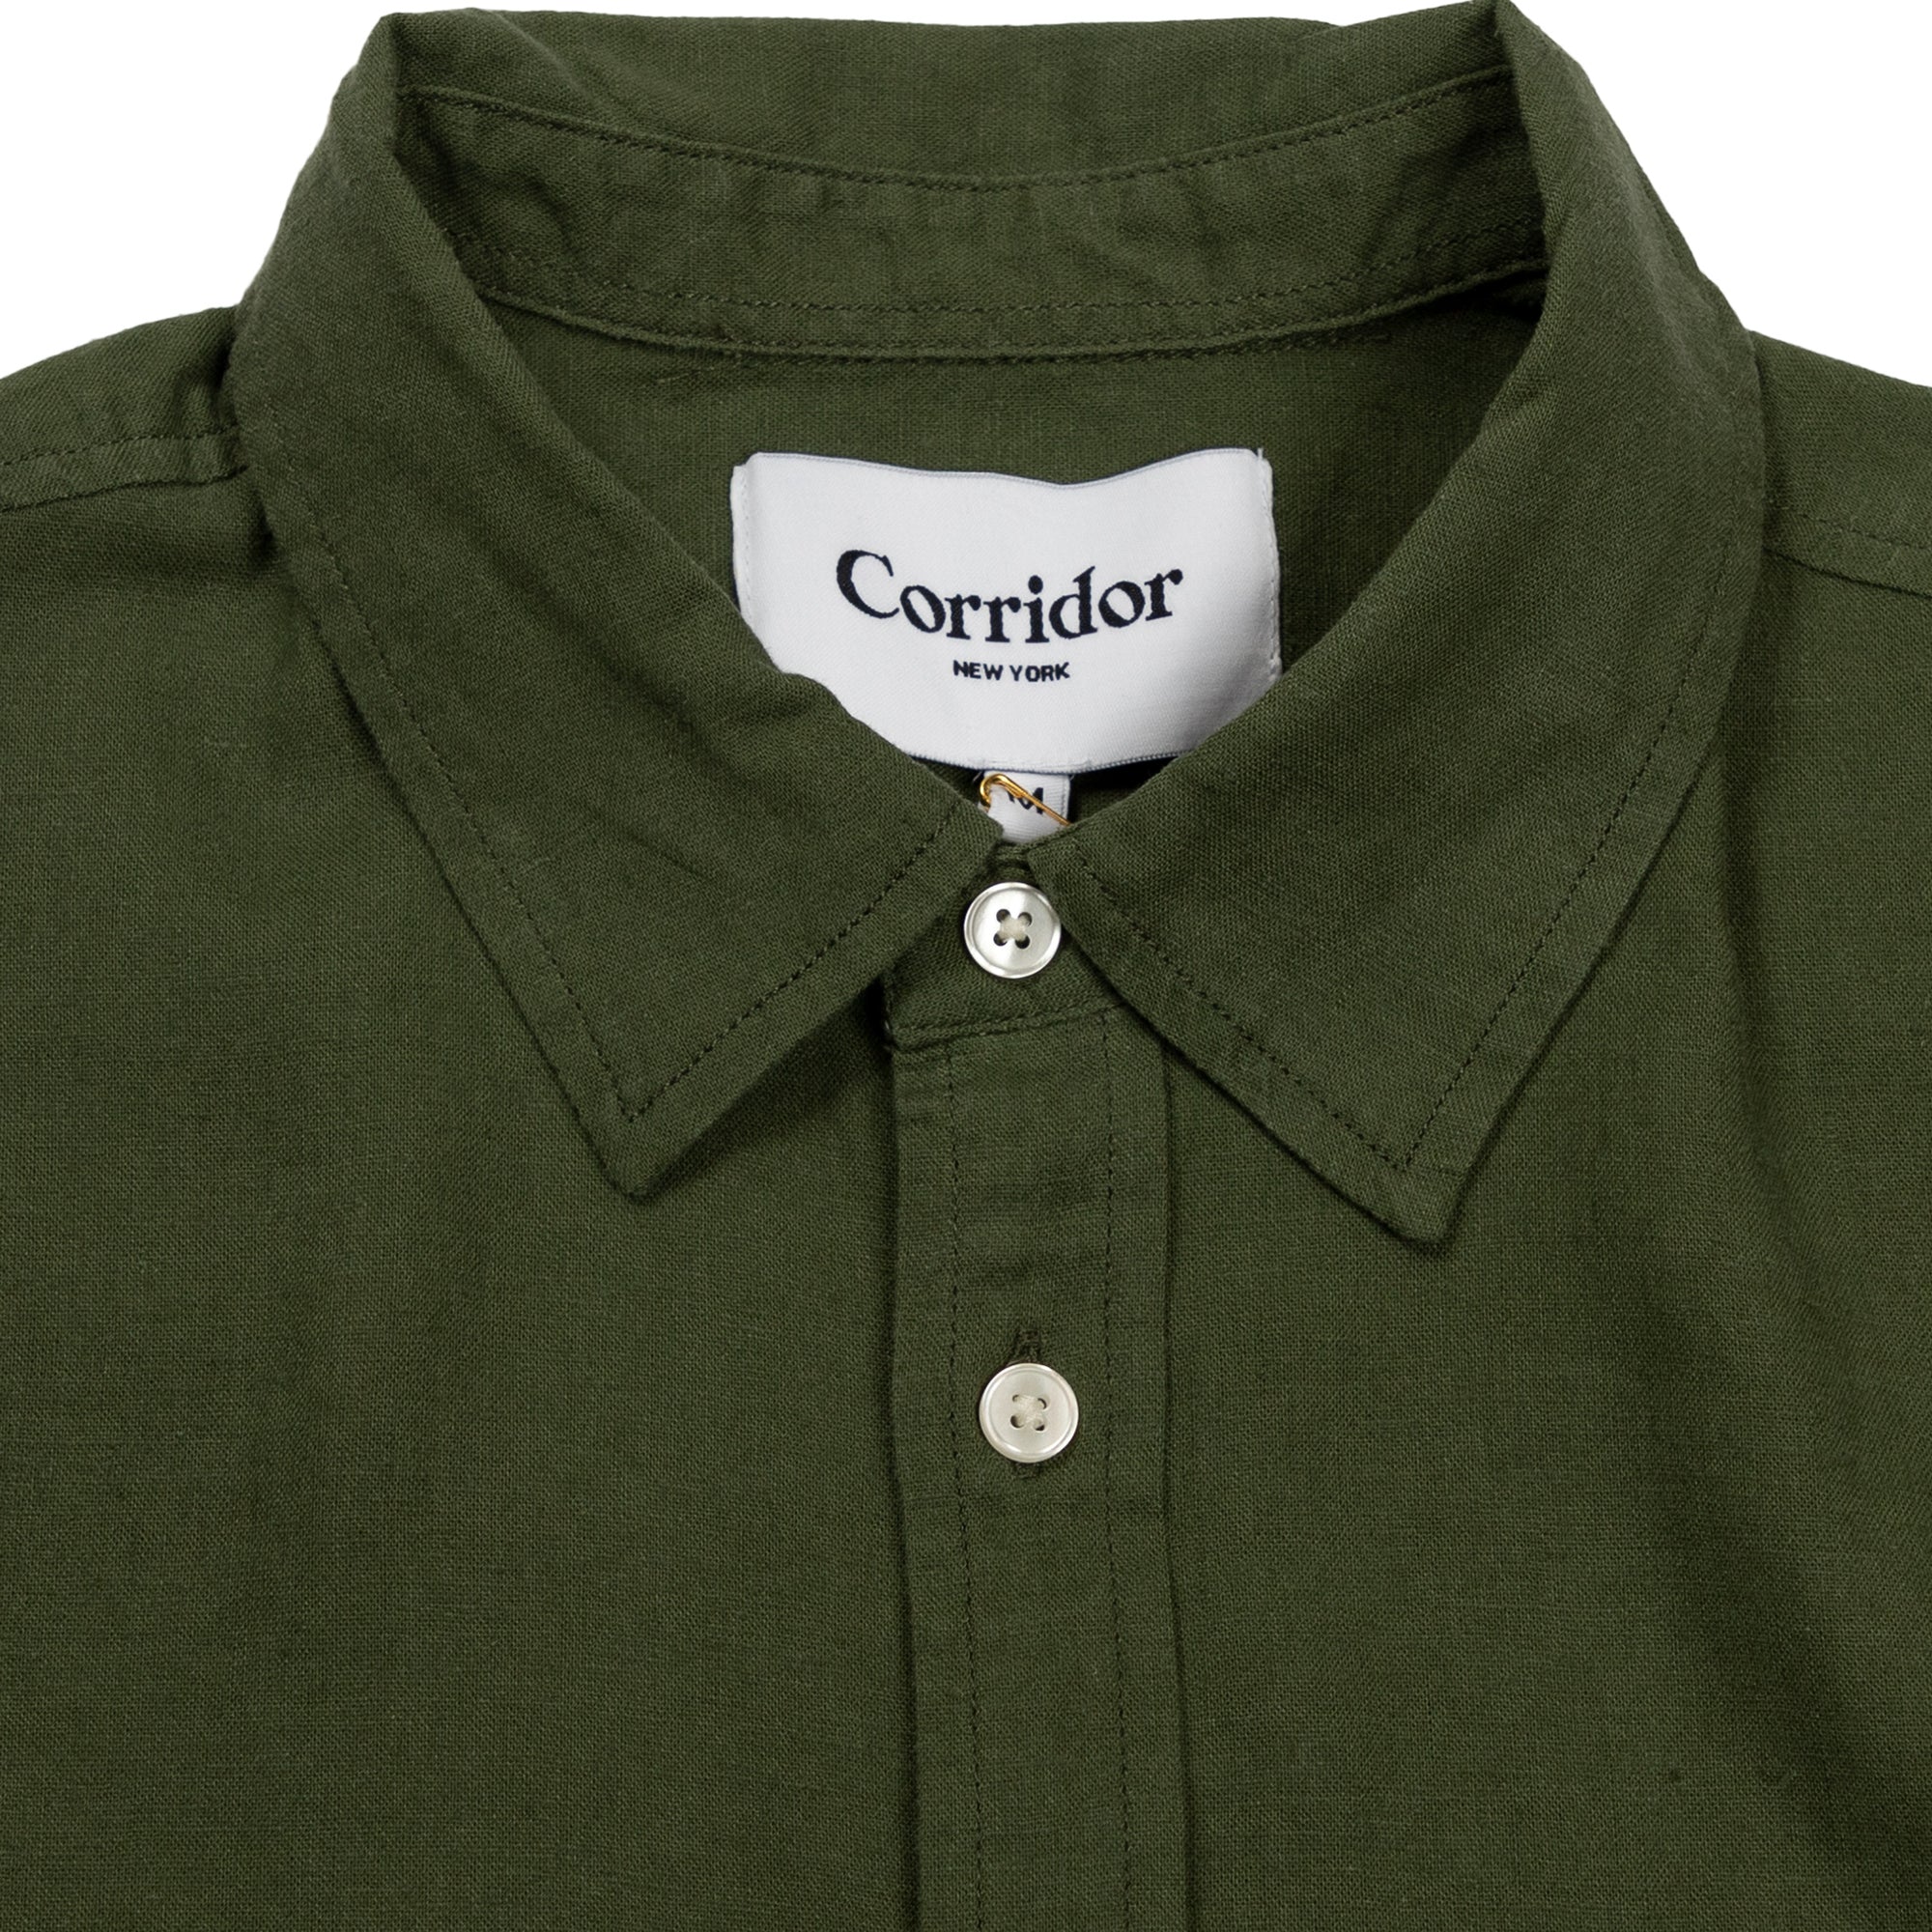 Corridor Linen Long Sleeve Shirt in Olive